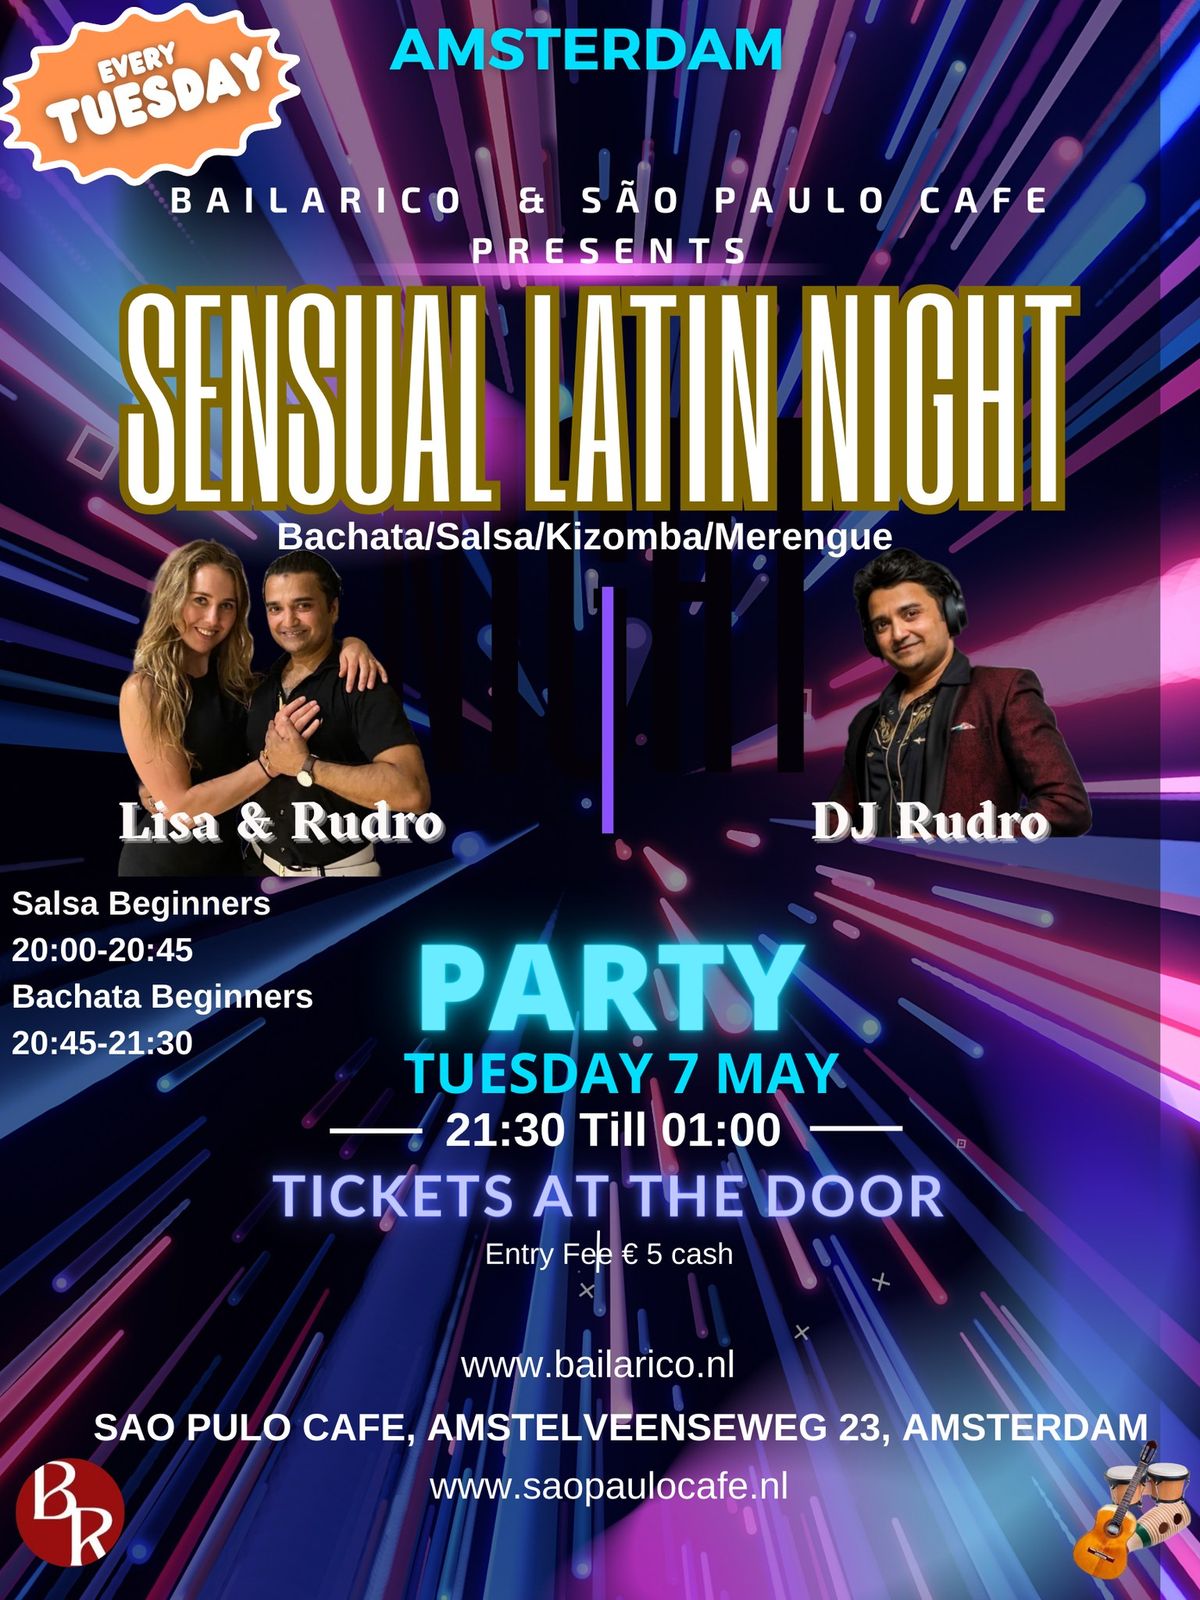 Bachata\/Salsa Tryout & Sensual Tuesday Latin Night Amsterdam by BailaRico and Sao Paulo Cafe